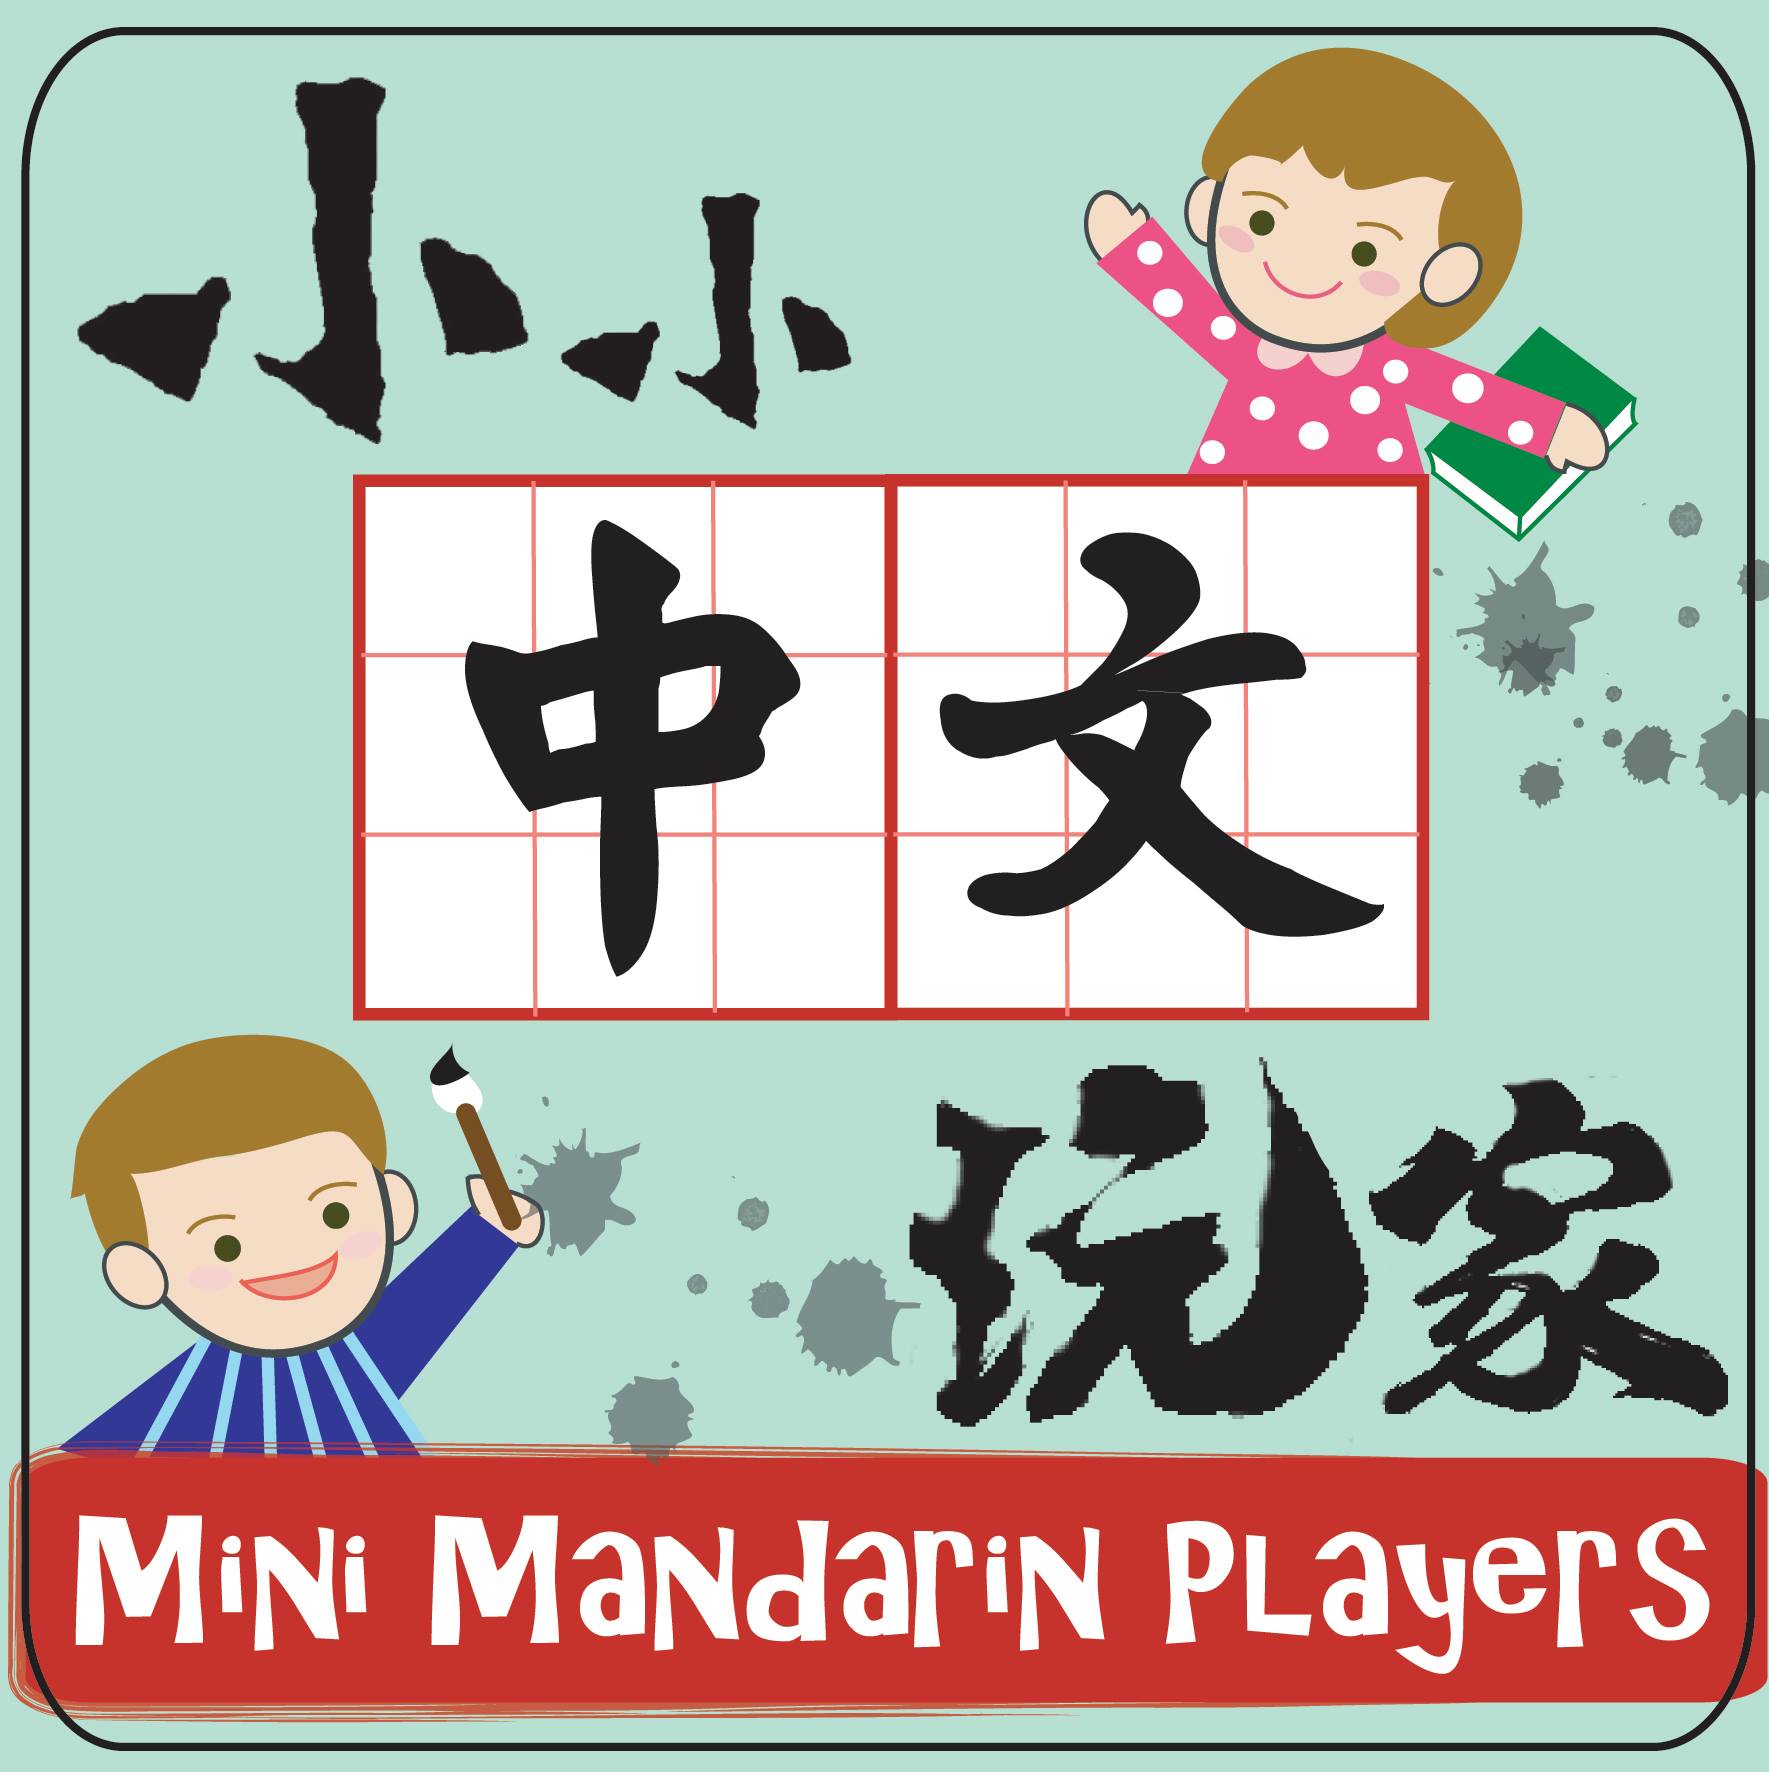 Mini Mandarin Musicians & Players's main image